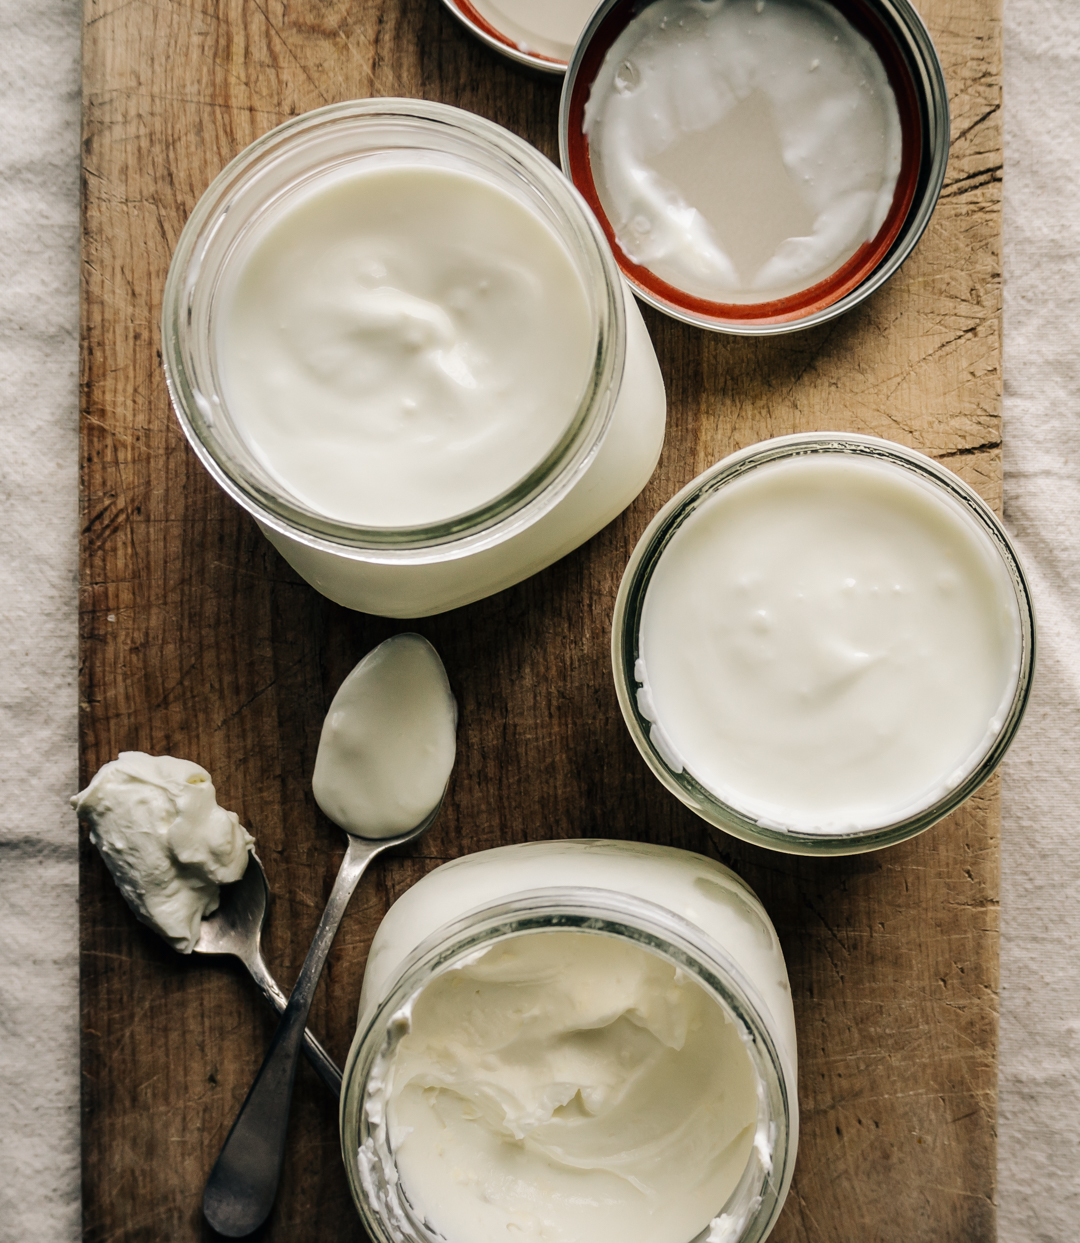 Instant Pot Yogurt Recipe: How To Make Yogurt In The Instant Pot